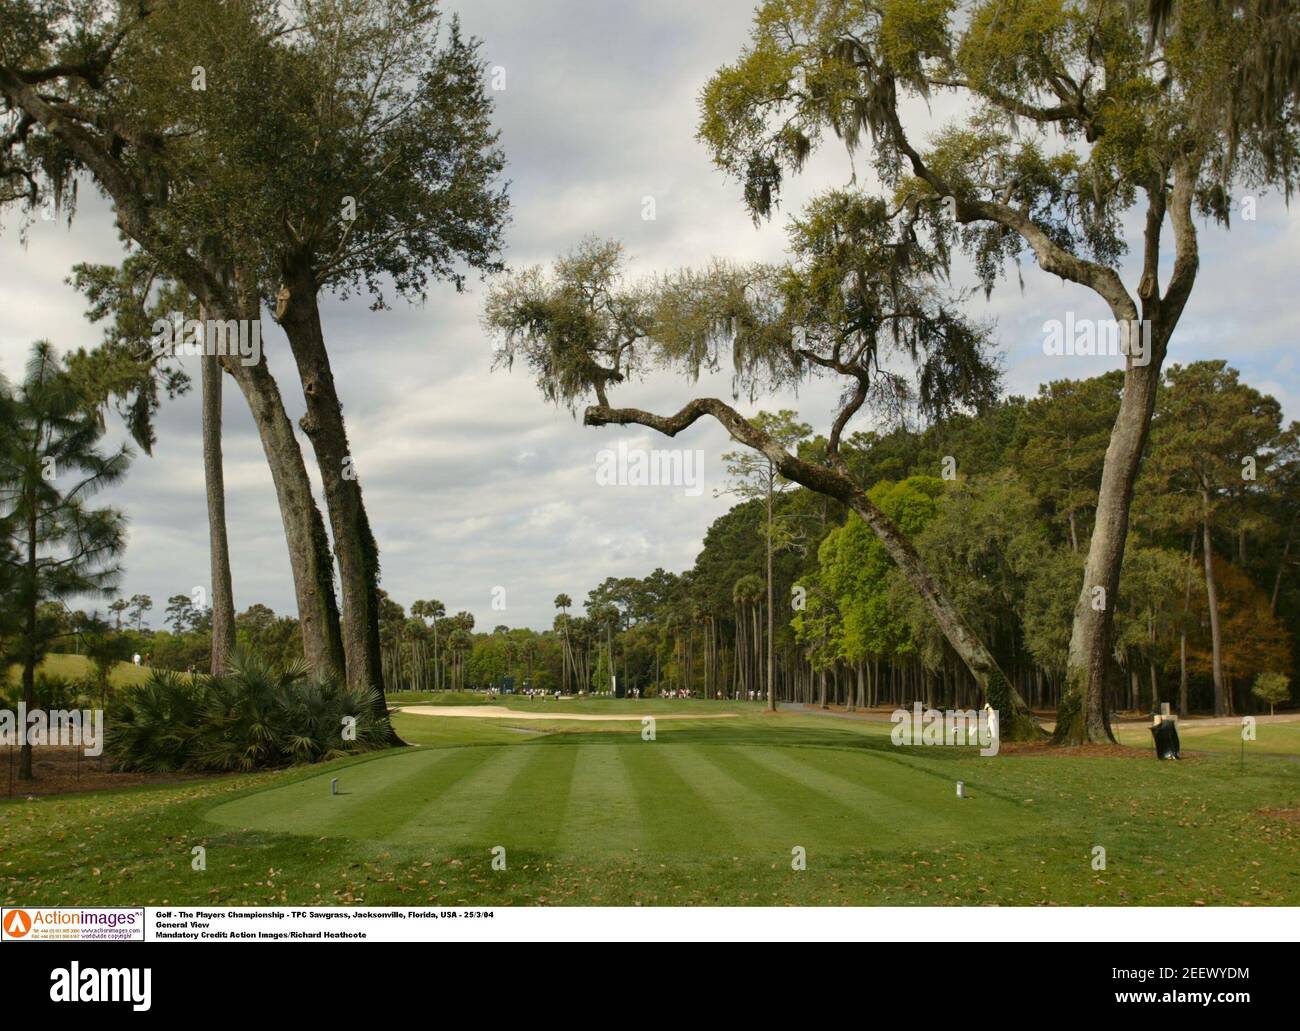 Golf The Players Championship Tpc Sawgrass Jacksonville Florida Usa 25 3 04 General View Mandatory Credit Action Images Richard Heathcote Stock Photo Alamy